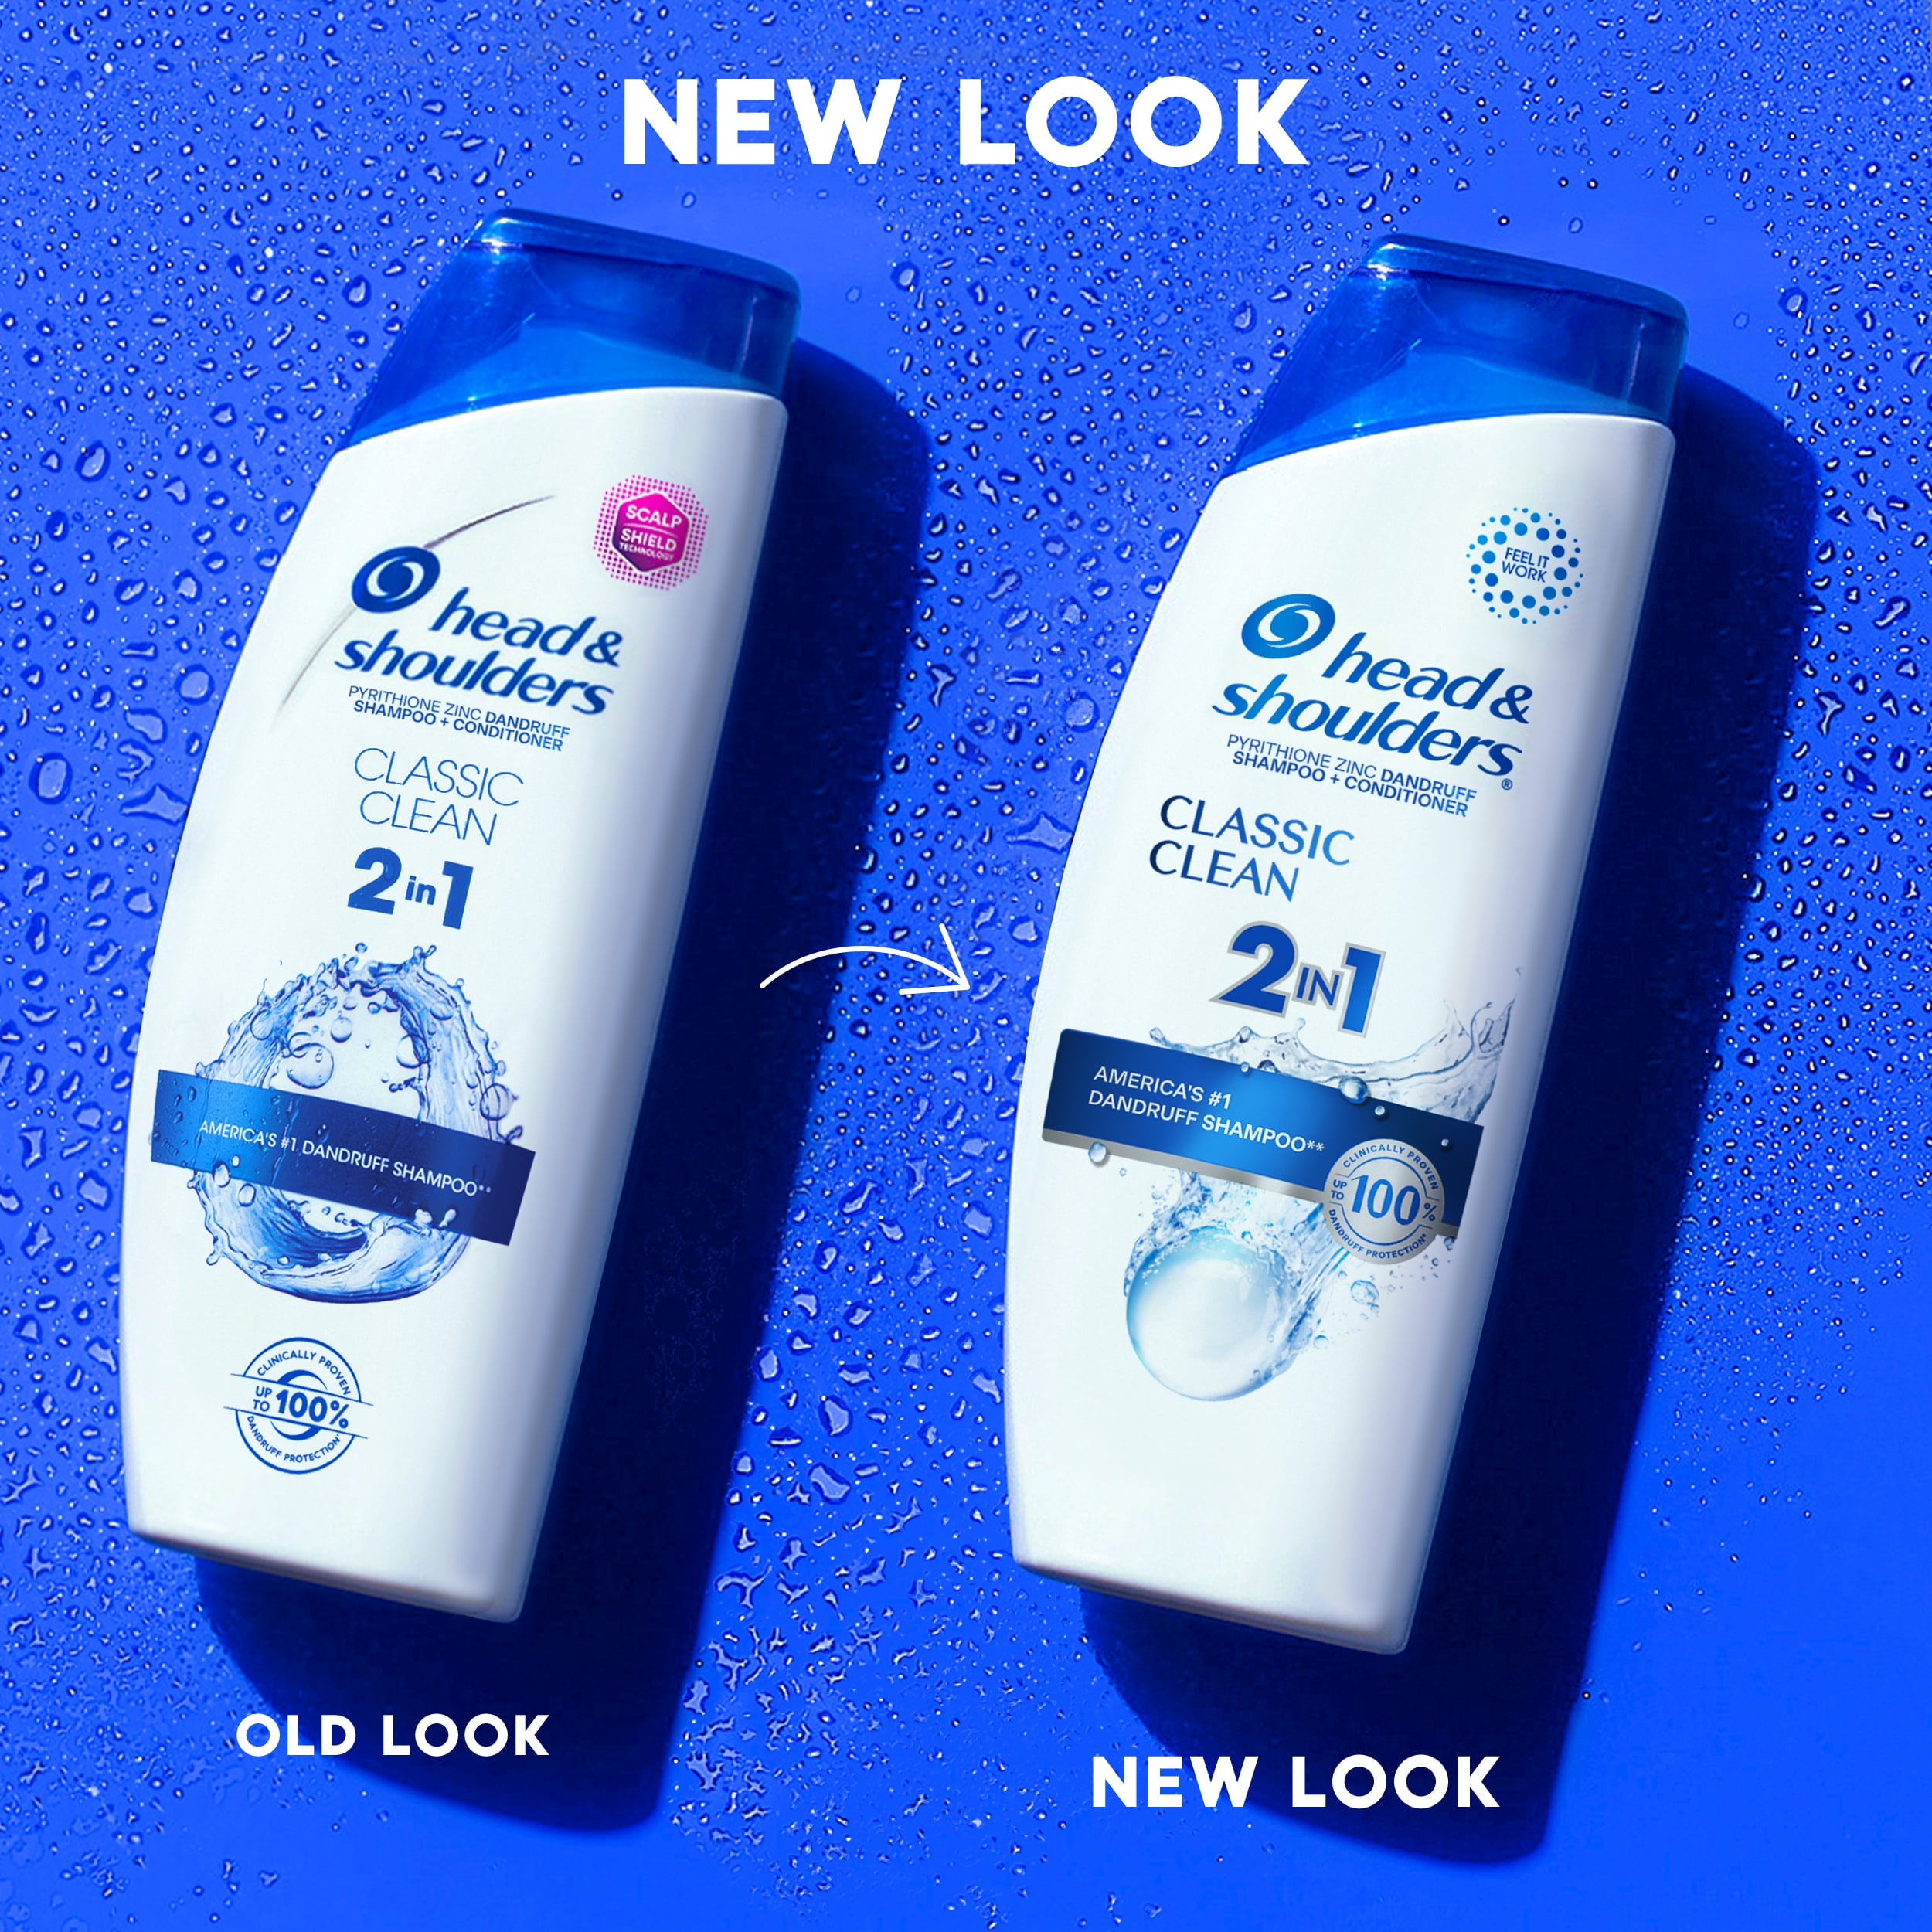 & Shoulders in 1 Dandruff Shampoo and Conditioner, Classic oz - Walmart.com